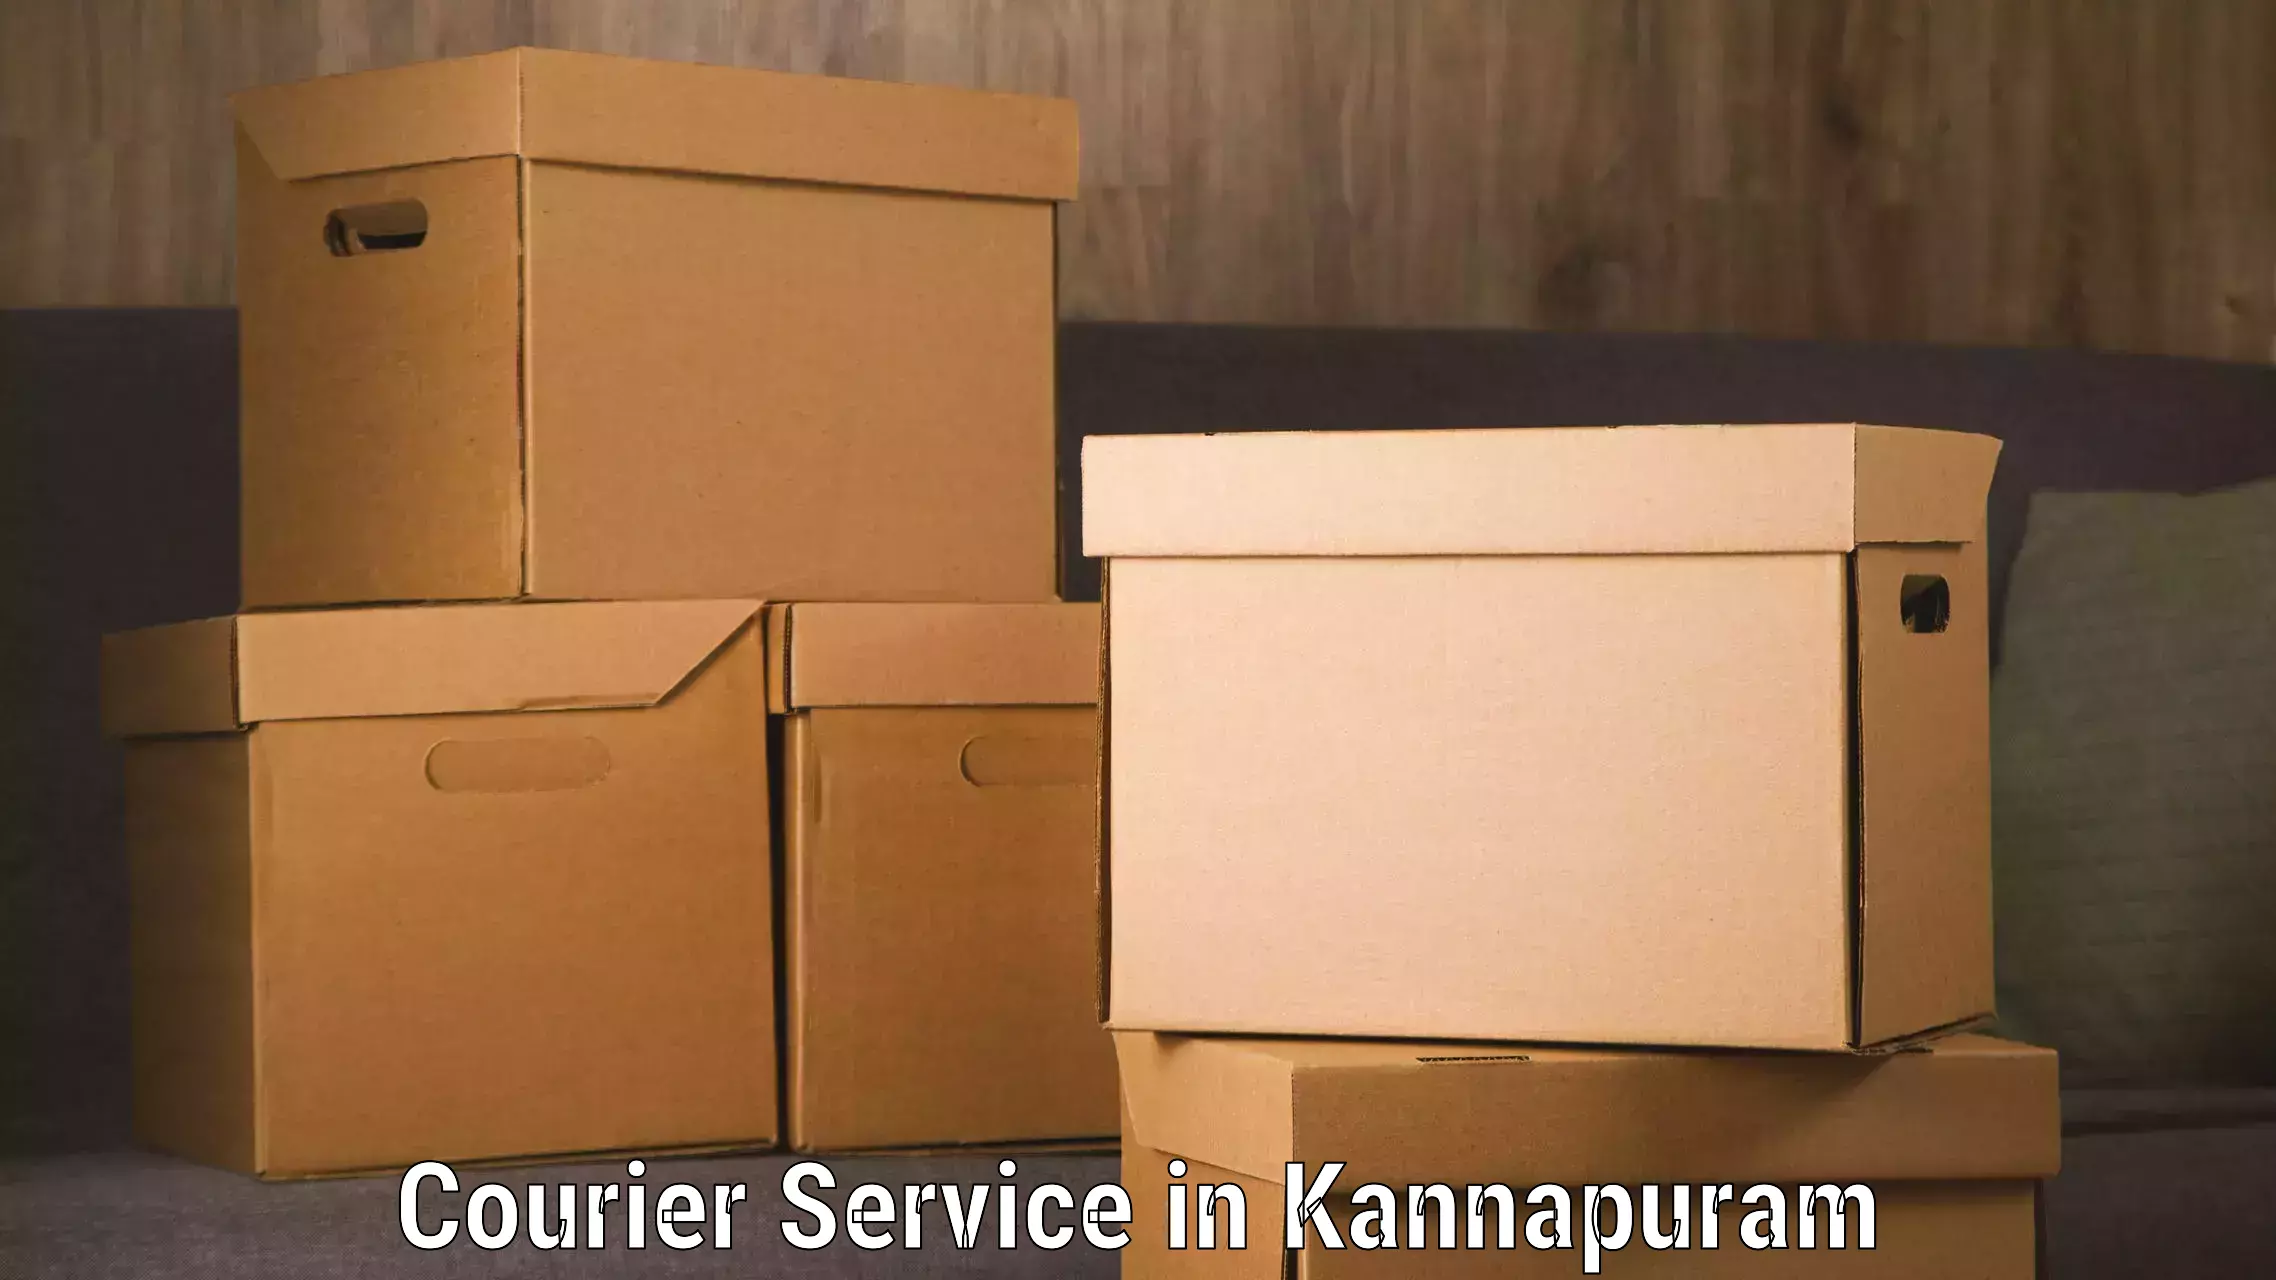 Affordable logistics services in Kannapuram